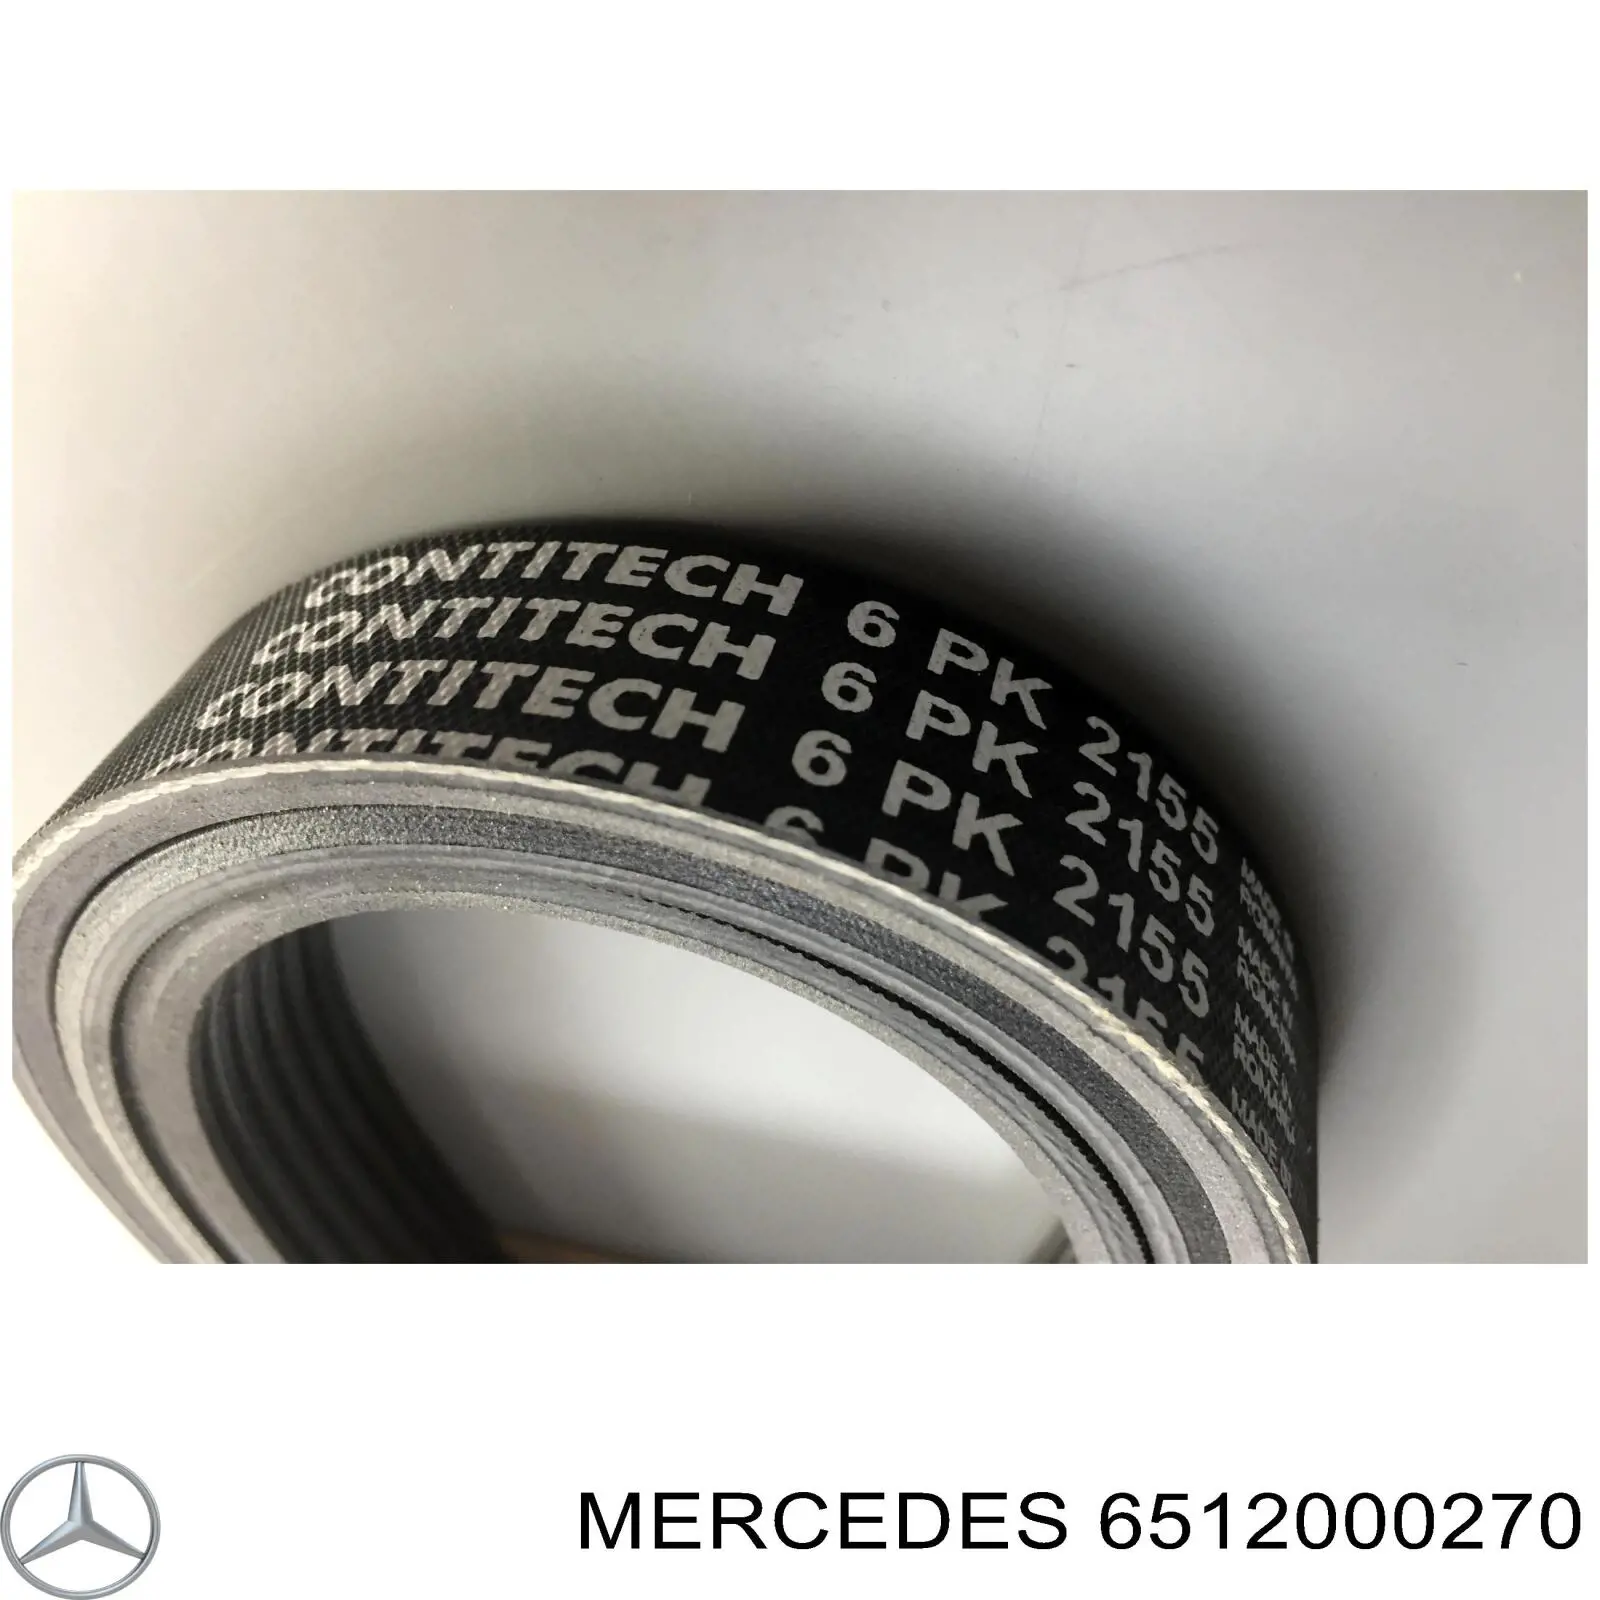 6512000270 Mercedes polea inversión / guía, correa poli v